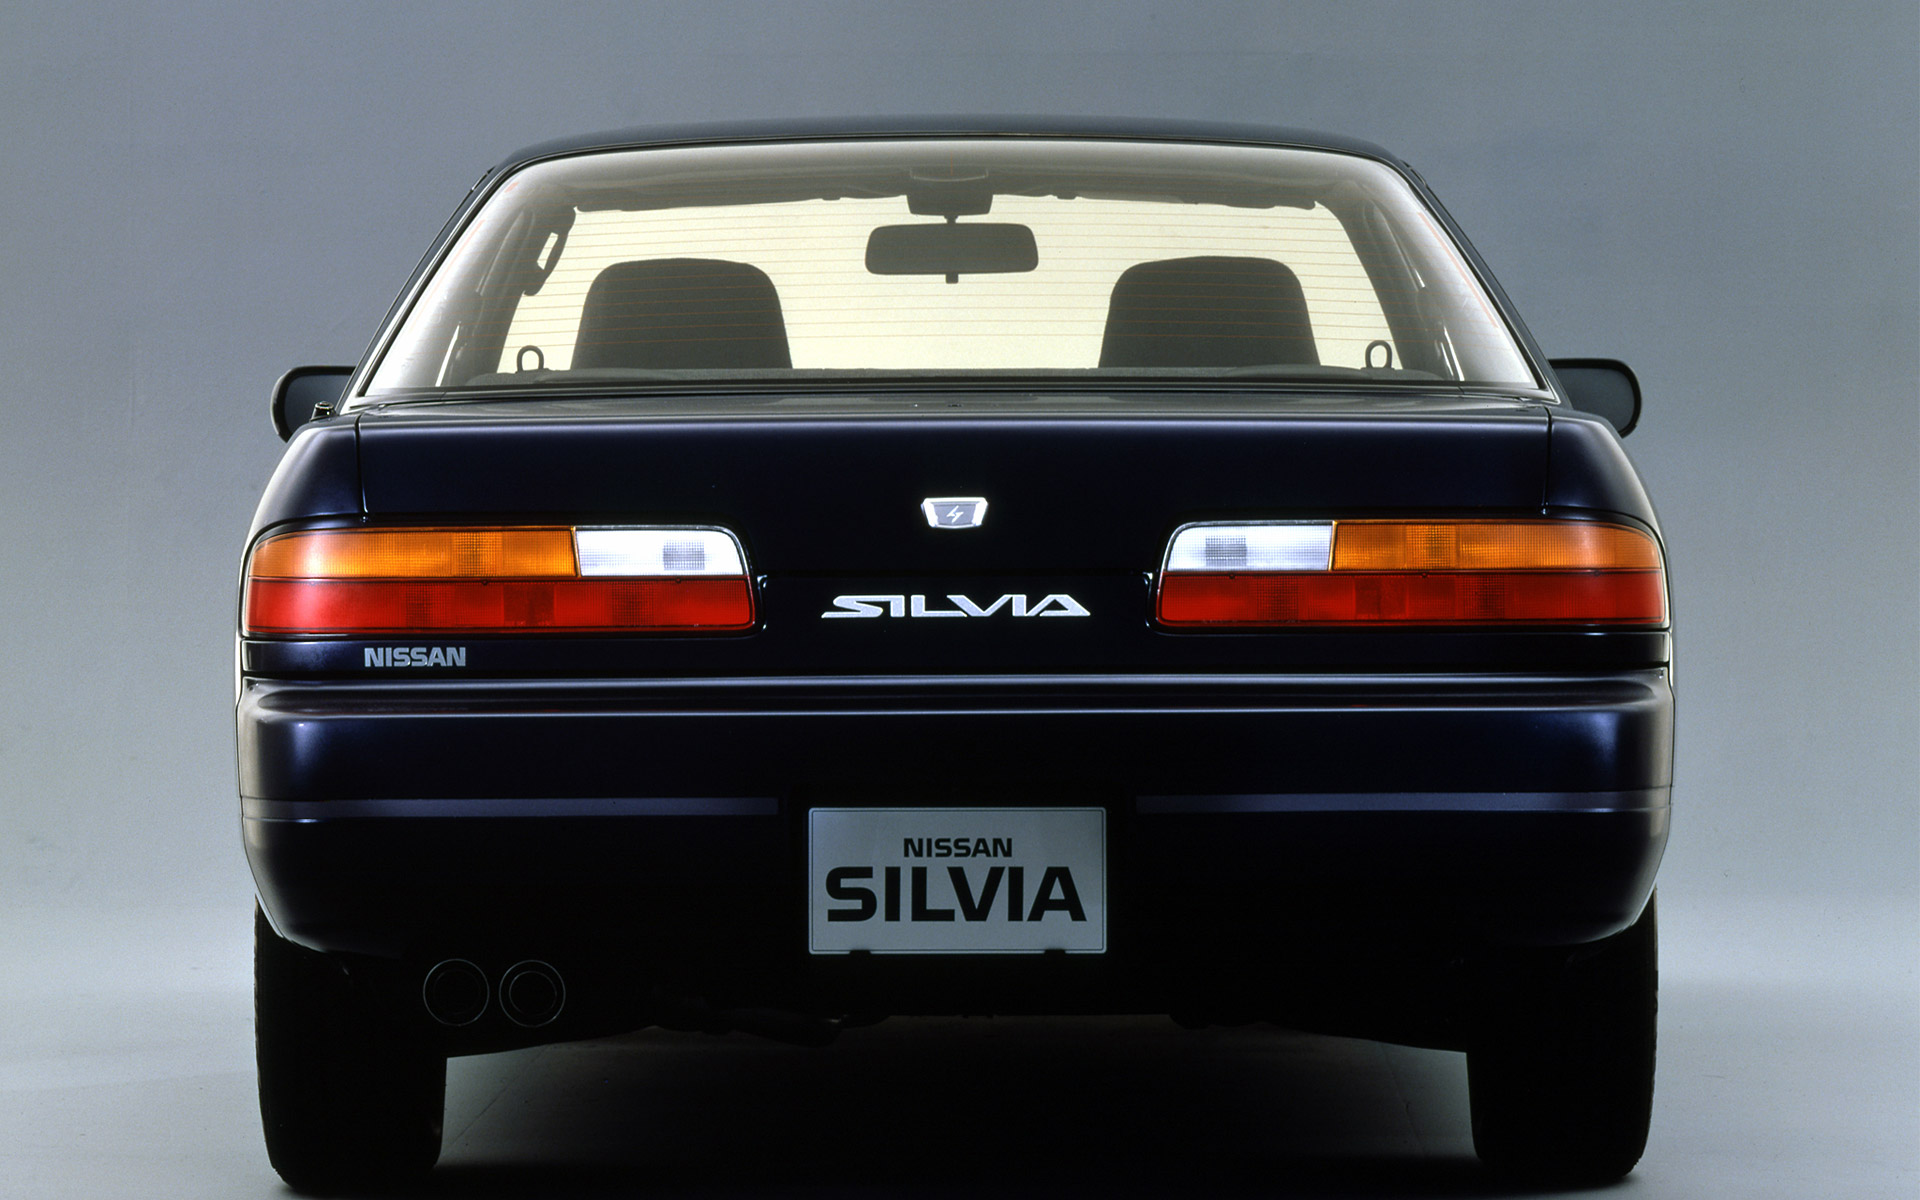  1988 Nissan Silvia Wallpaper.